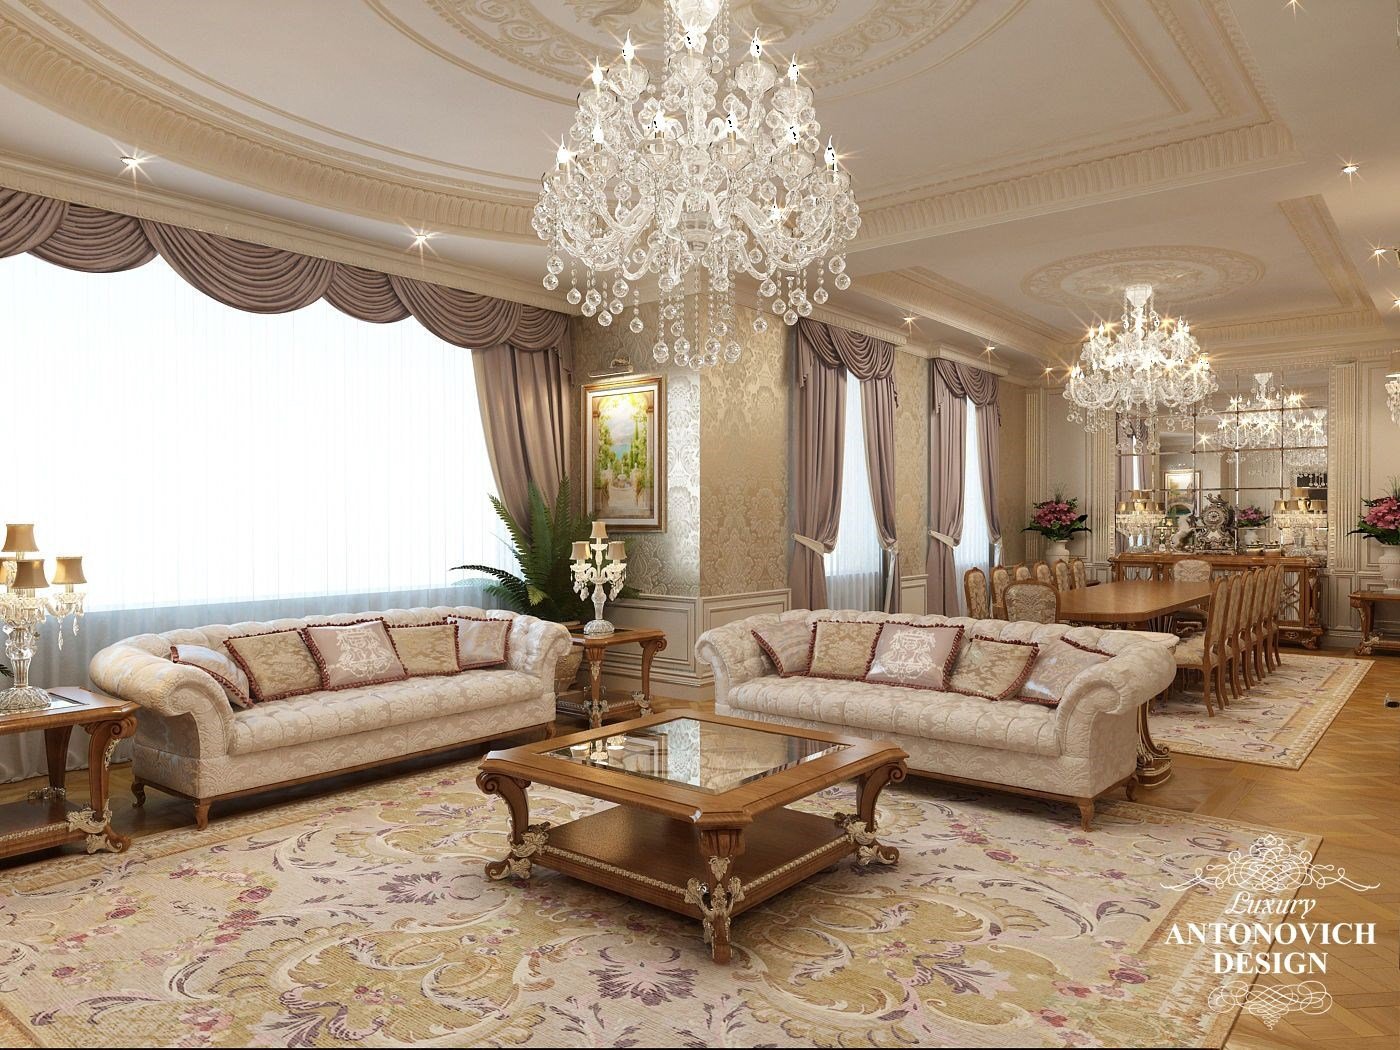 Luxury-Antonovich-Design-gostinnaya-05